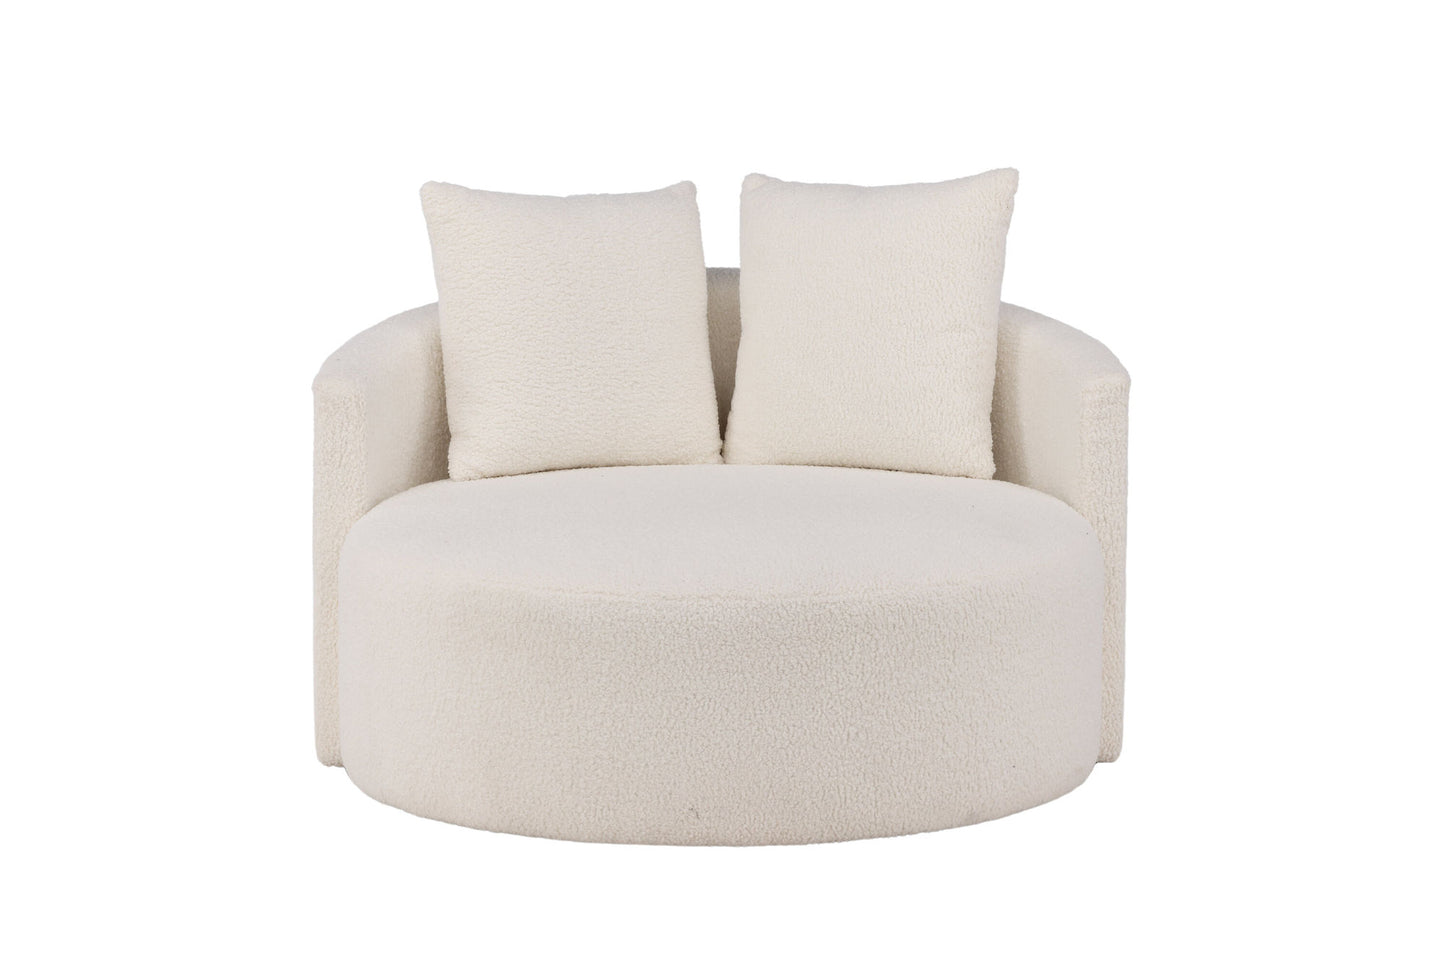 Kelso sofa white teddy